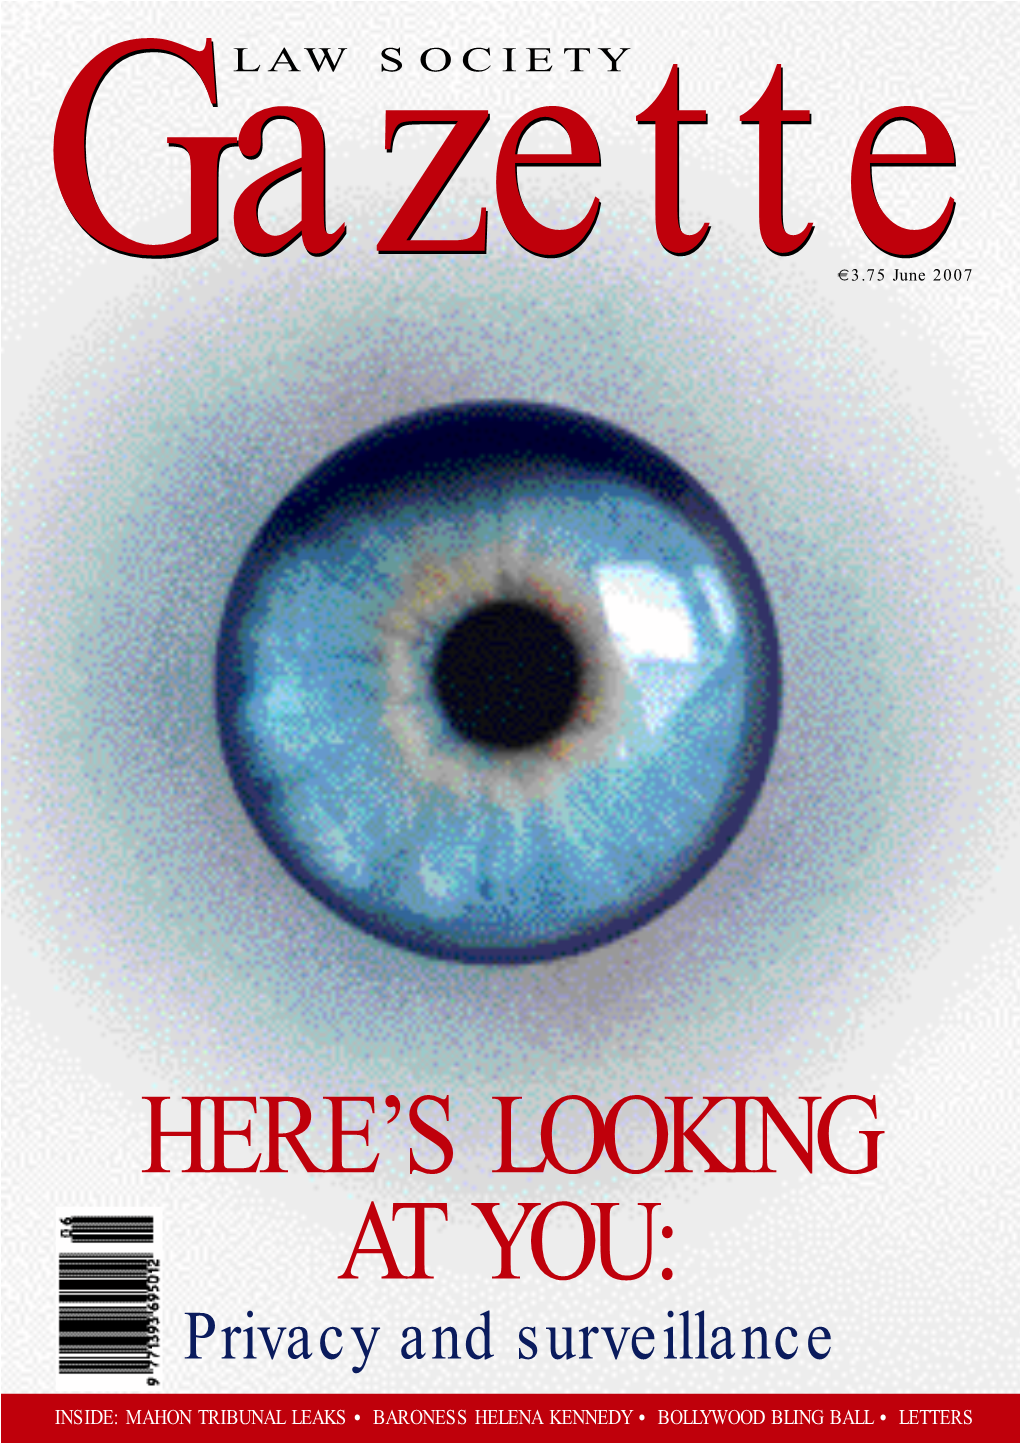 Gazette€3.75 June 2007